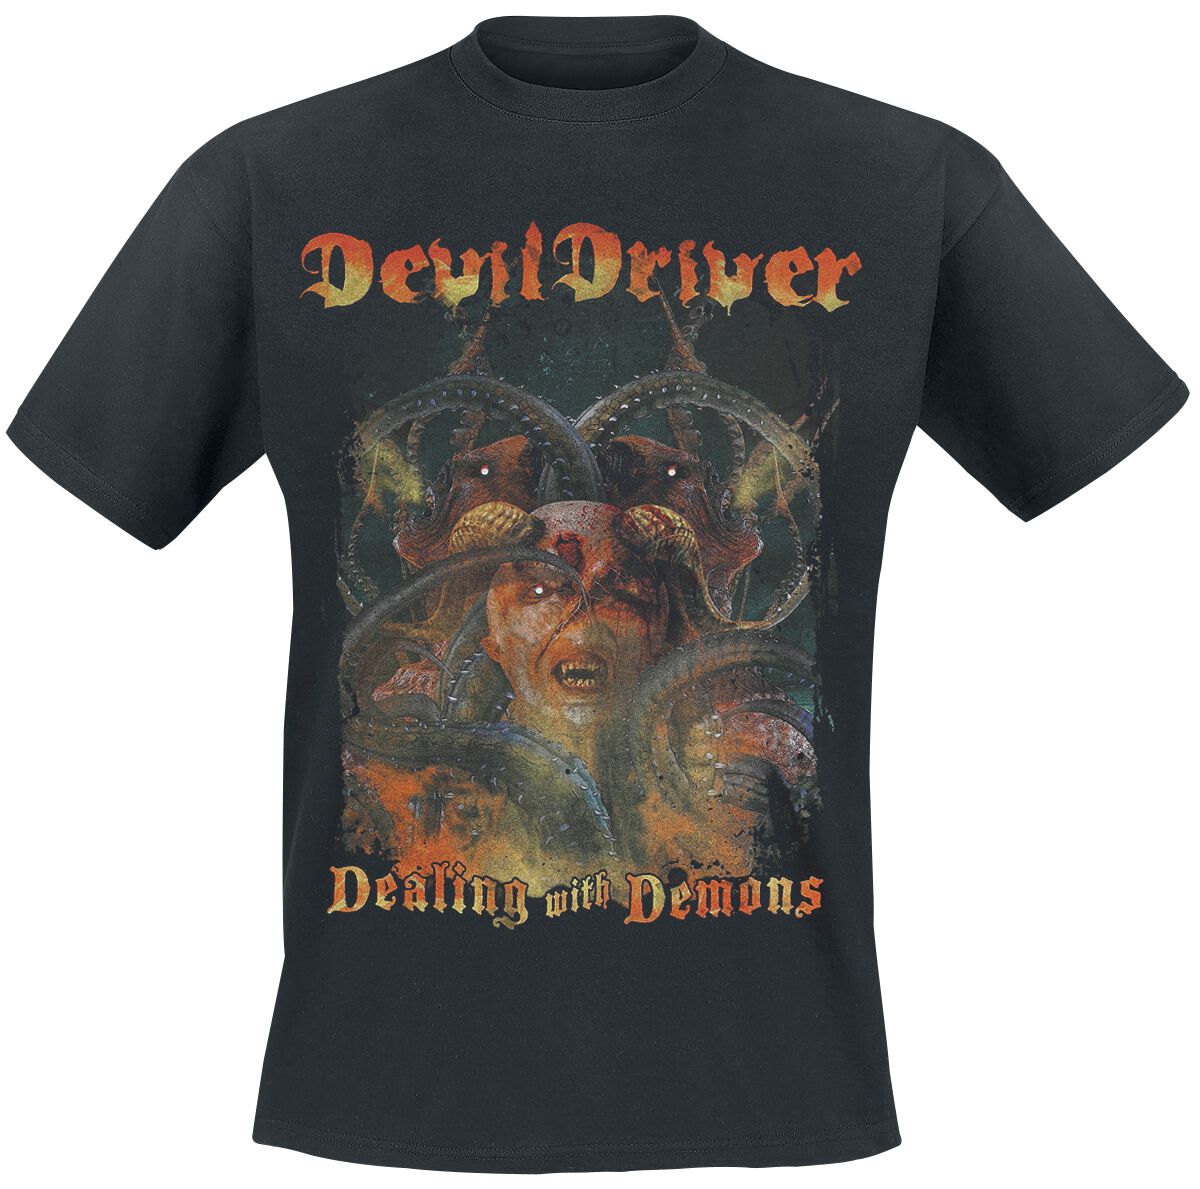 DevilDriver Dealing With Demons T-Shirt black